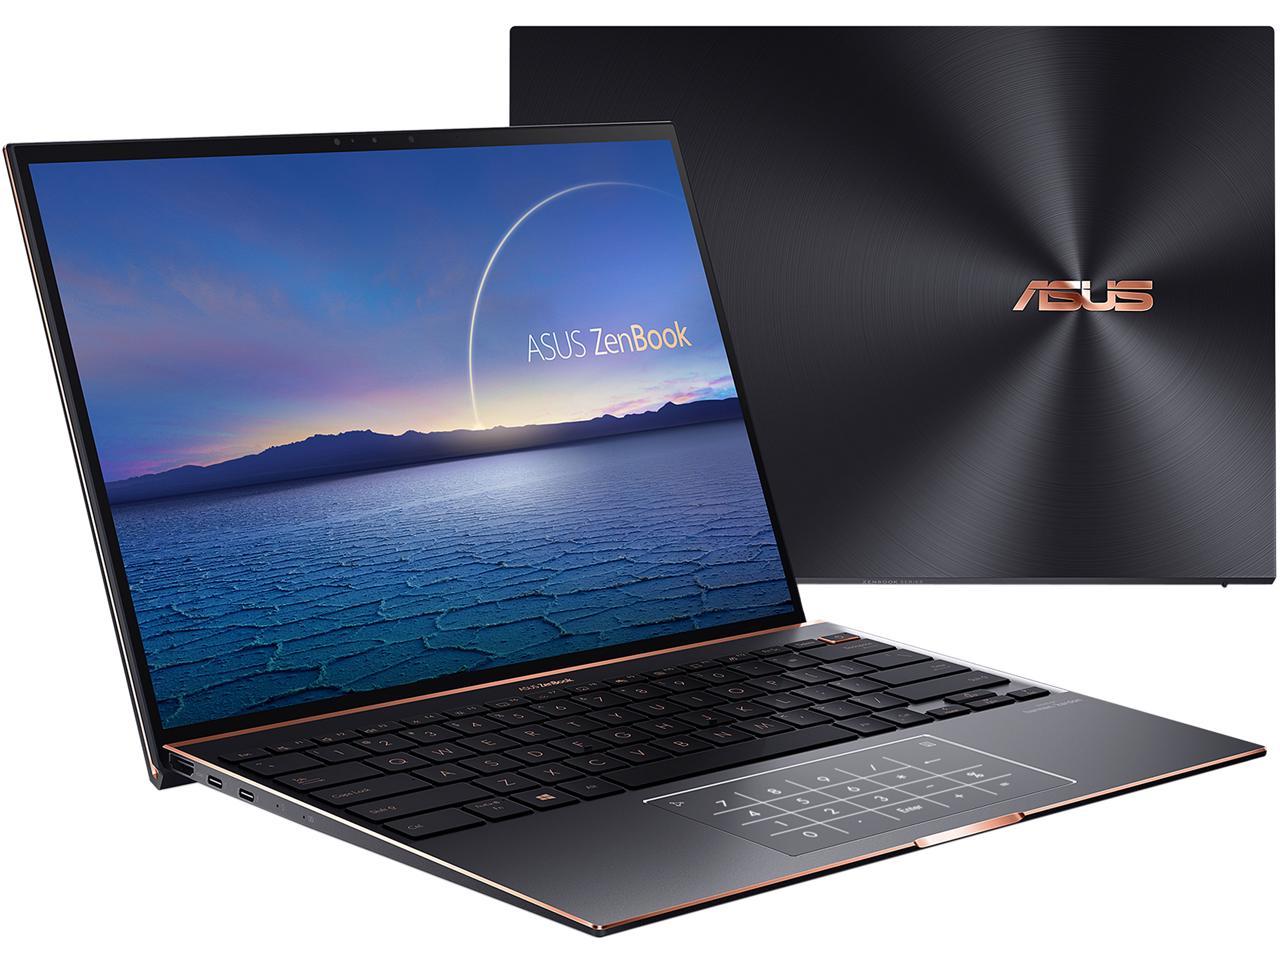 ASUS ZenBook S Ultra Slim Laptop, 13.9" 3300x2200 3:2 500nits Touch Display, Intel Evo Platform Core i7-1165G7 CPU, 16GB RAM, 1TB SSD, Thunderbolt 4, TPM, Windows 10 Pro, Jade Black, UX393EA-XB77T - image 2 of 11